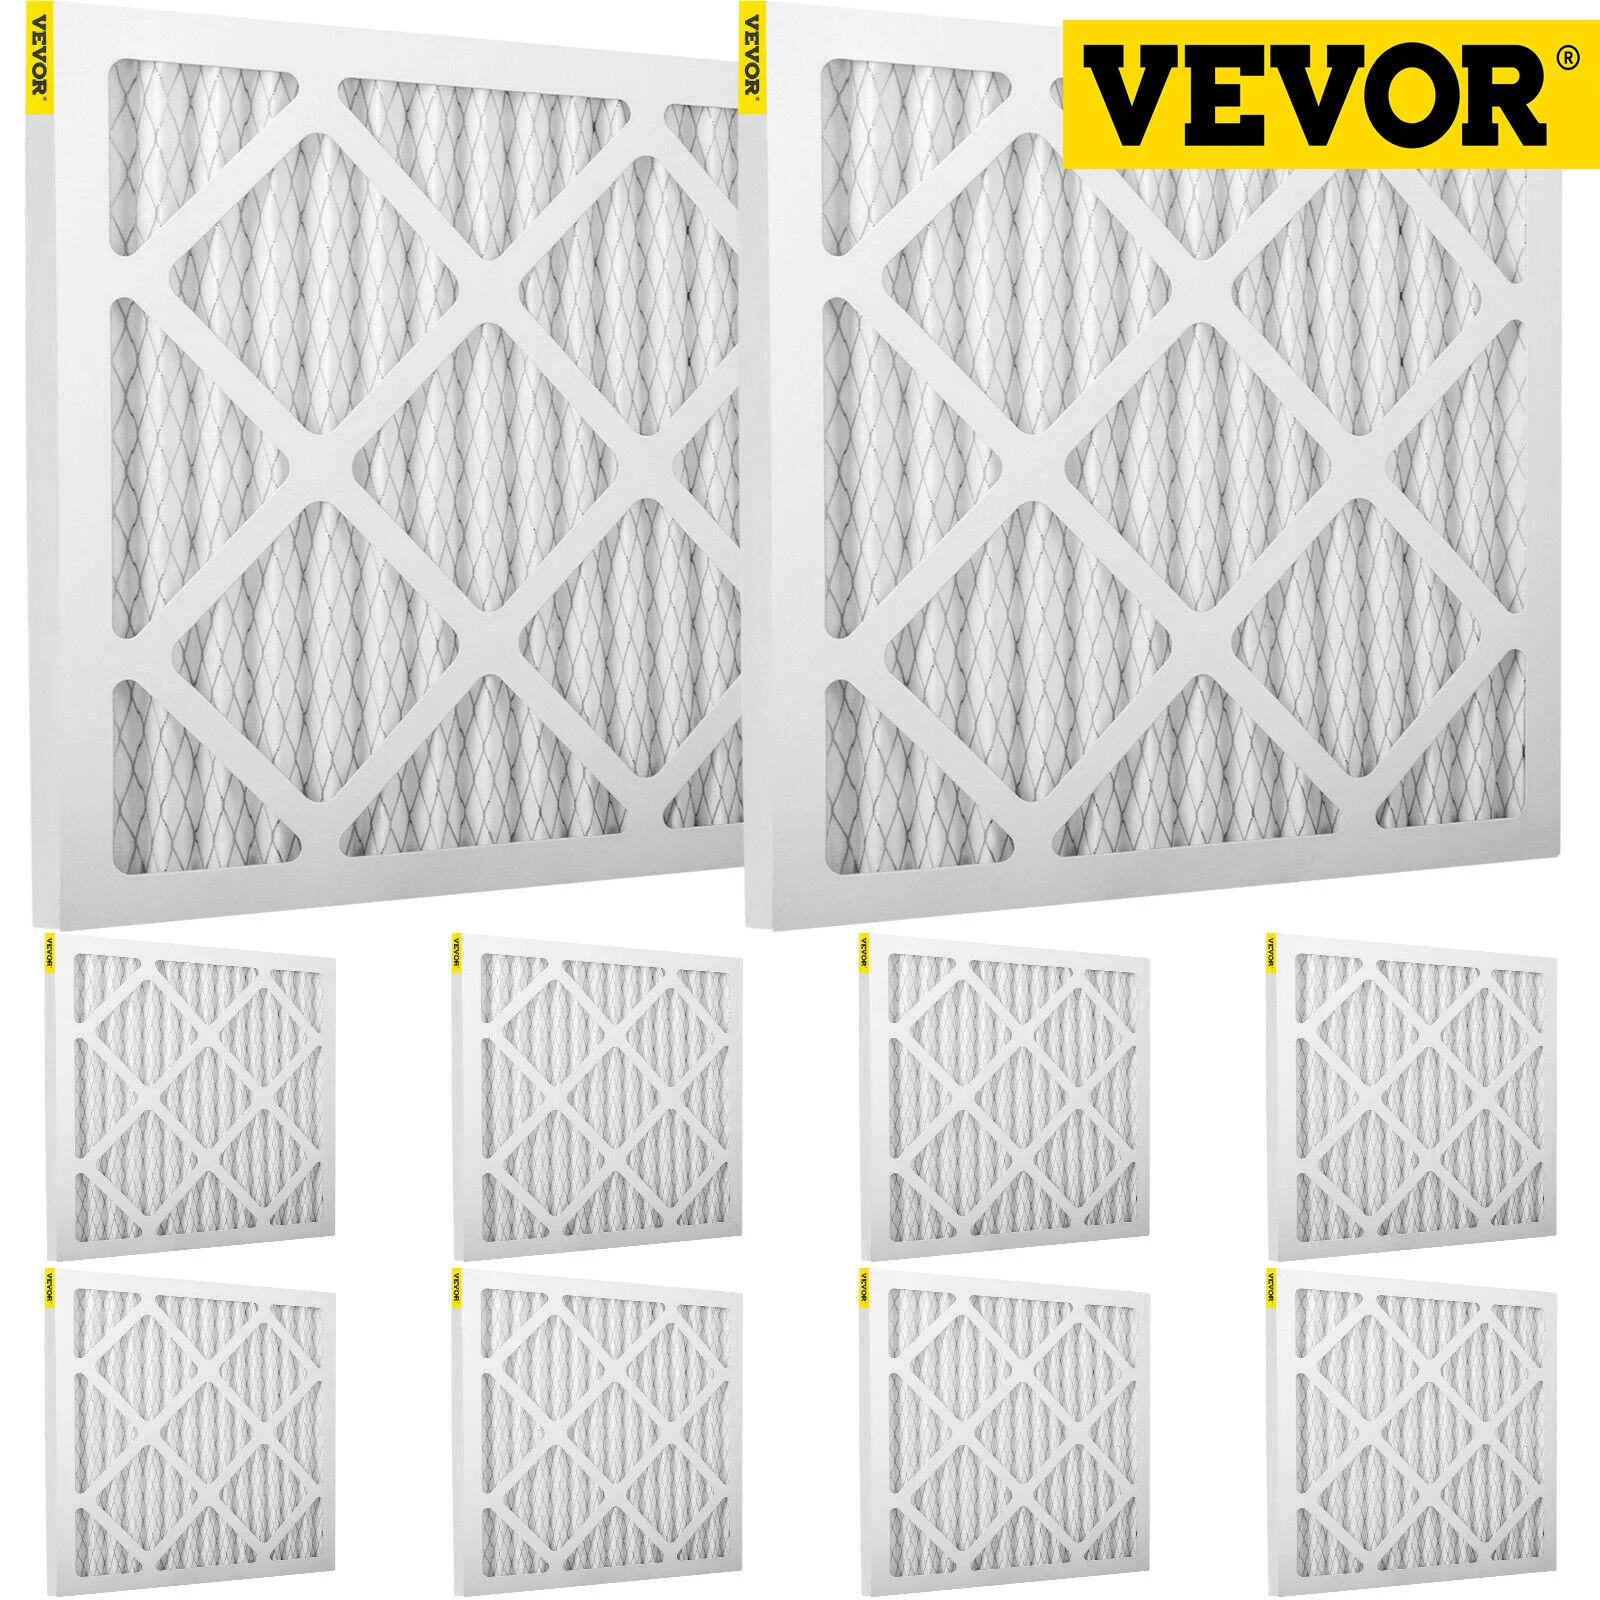 

VEVOR 16''x16'' HEPA Replacement Filter Kit 10/12pcs HVAC Pleated Air Filter Furnace Filter Replacement Set For Home Commercia